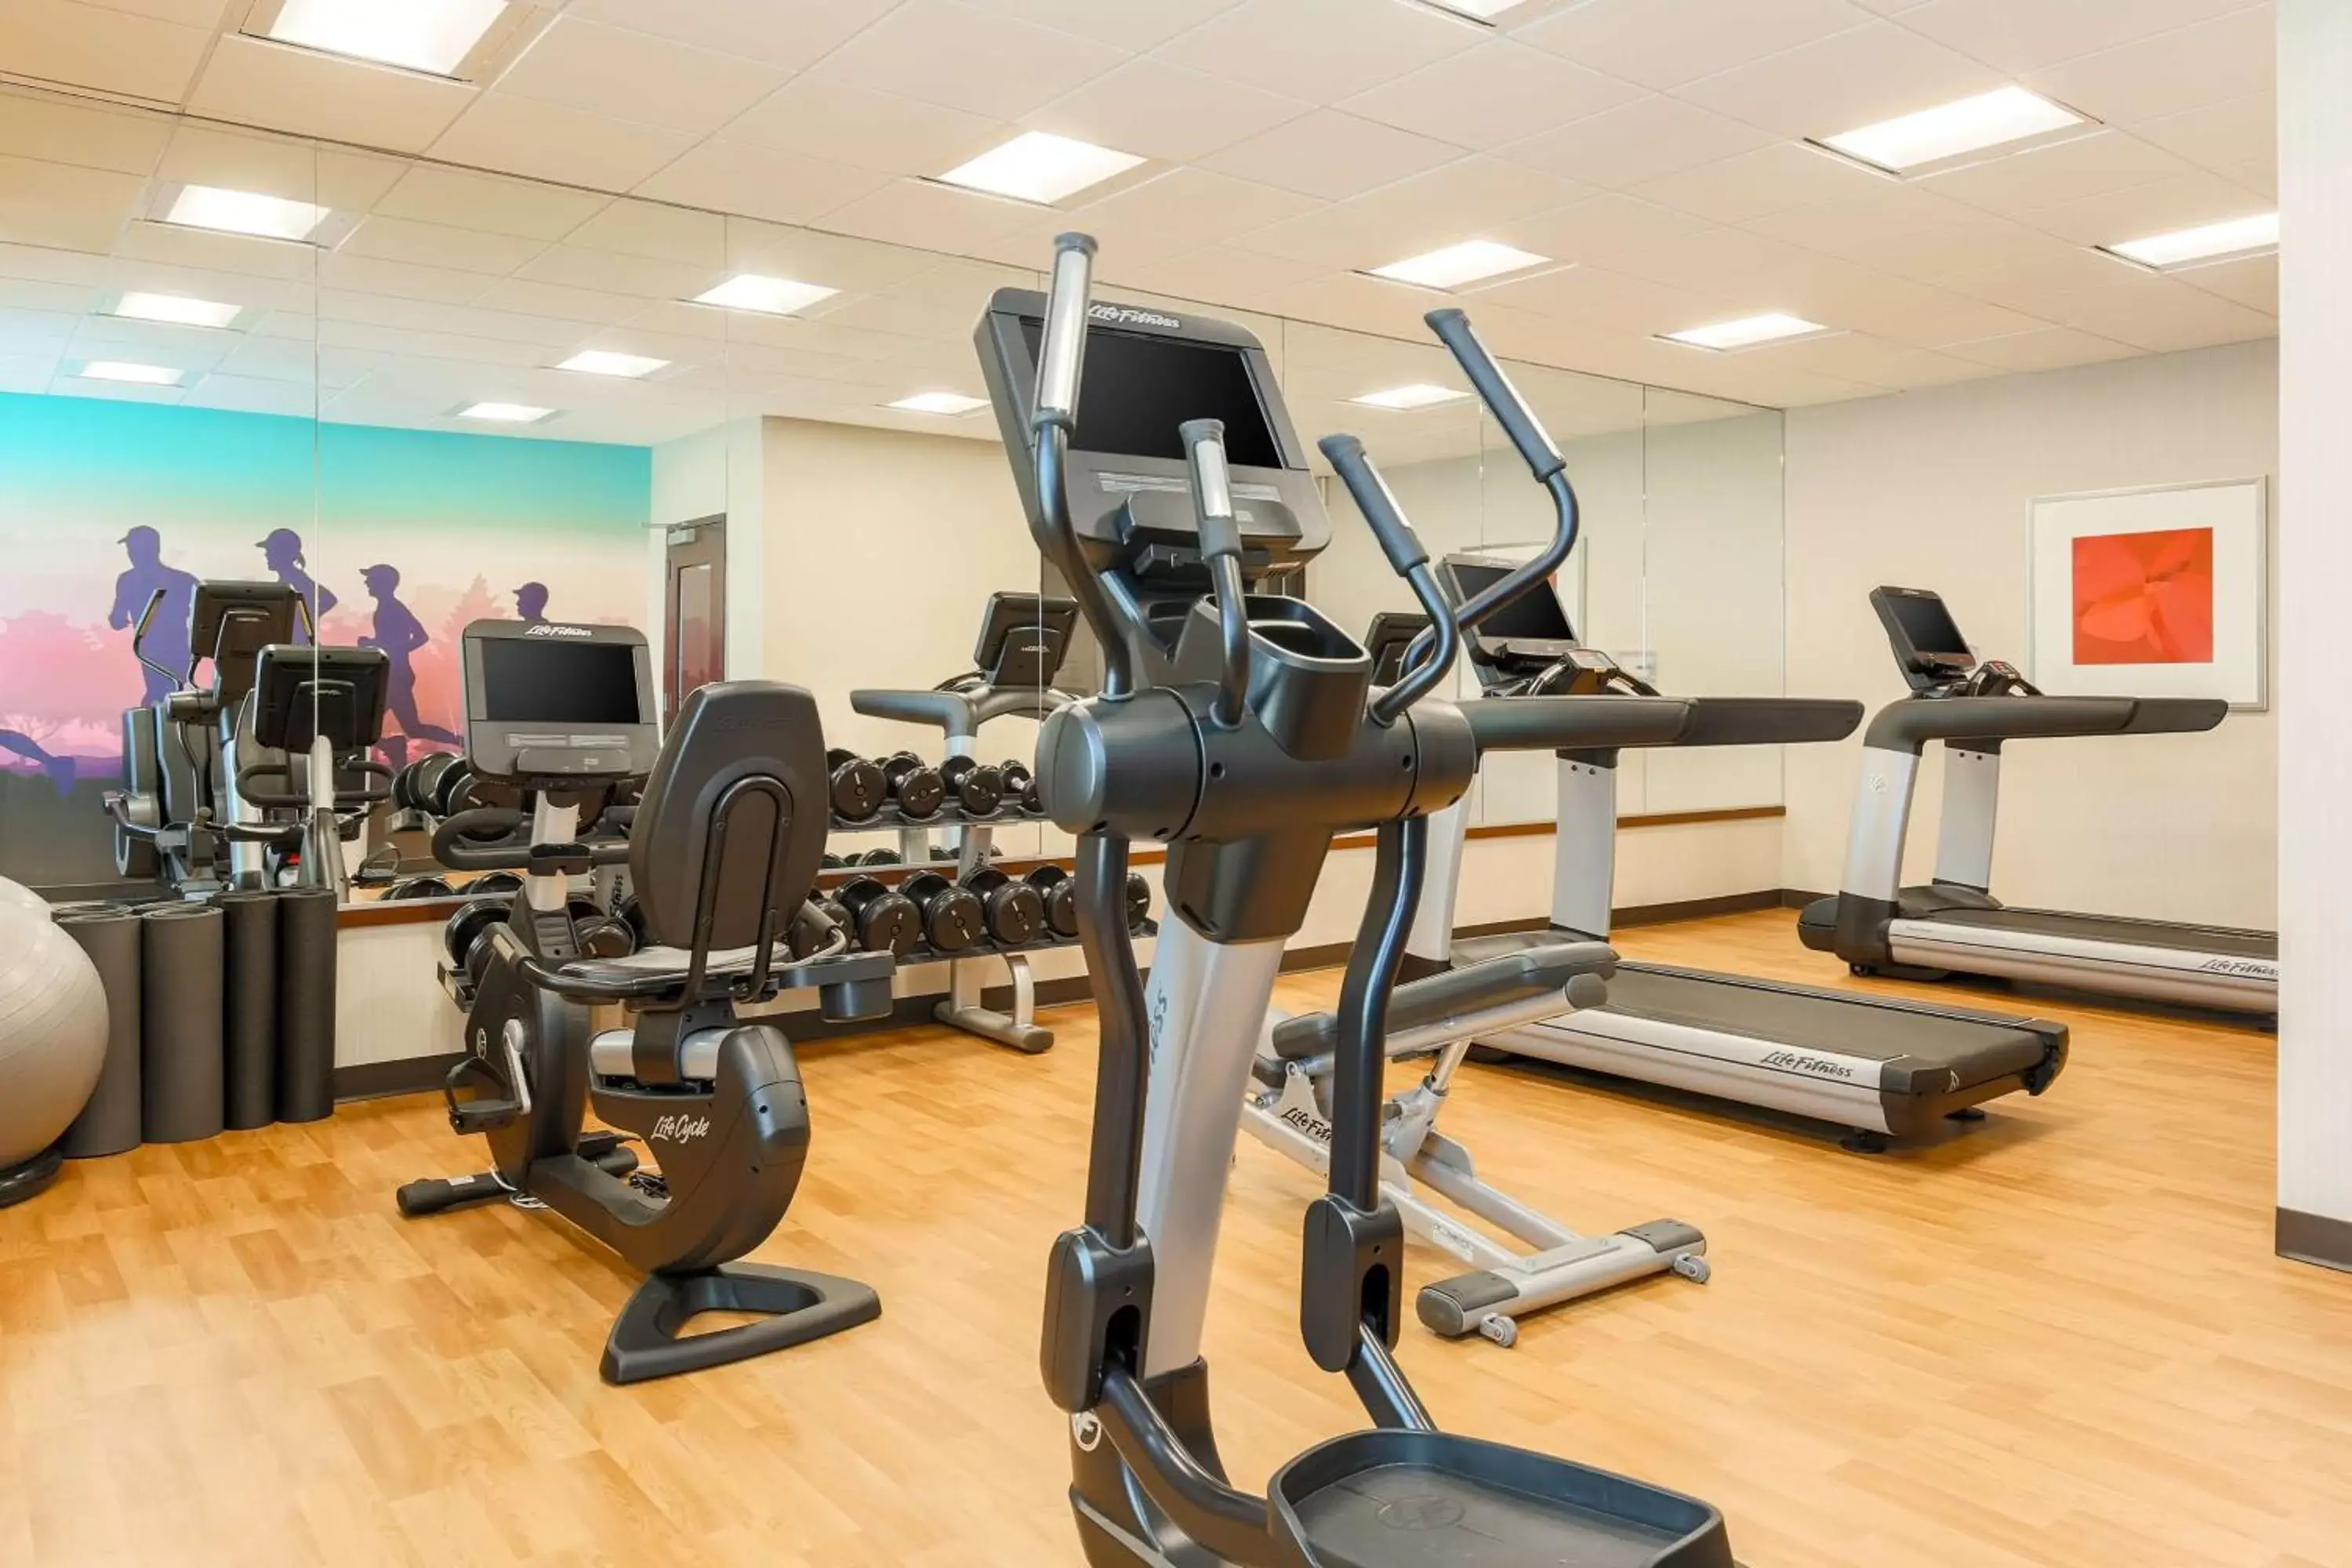 Fitness centre/facilities, Fitness Center/Facilities in Hyatt Place UC Davis